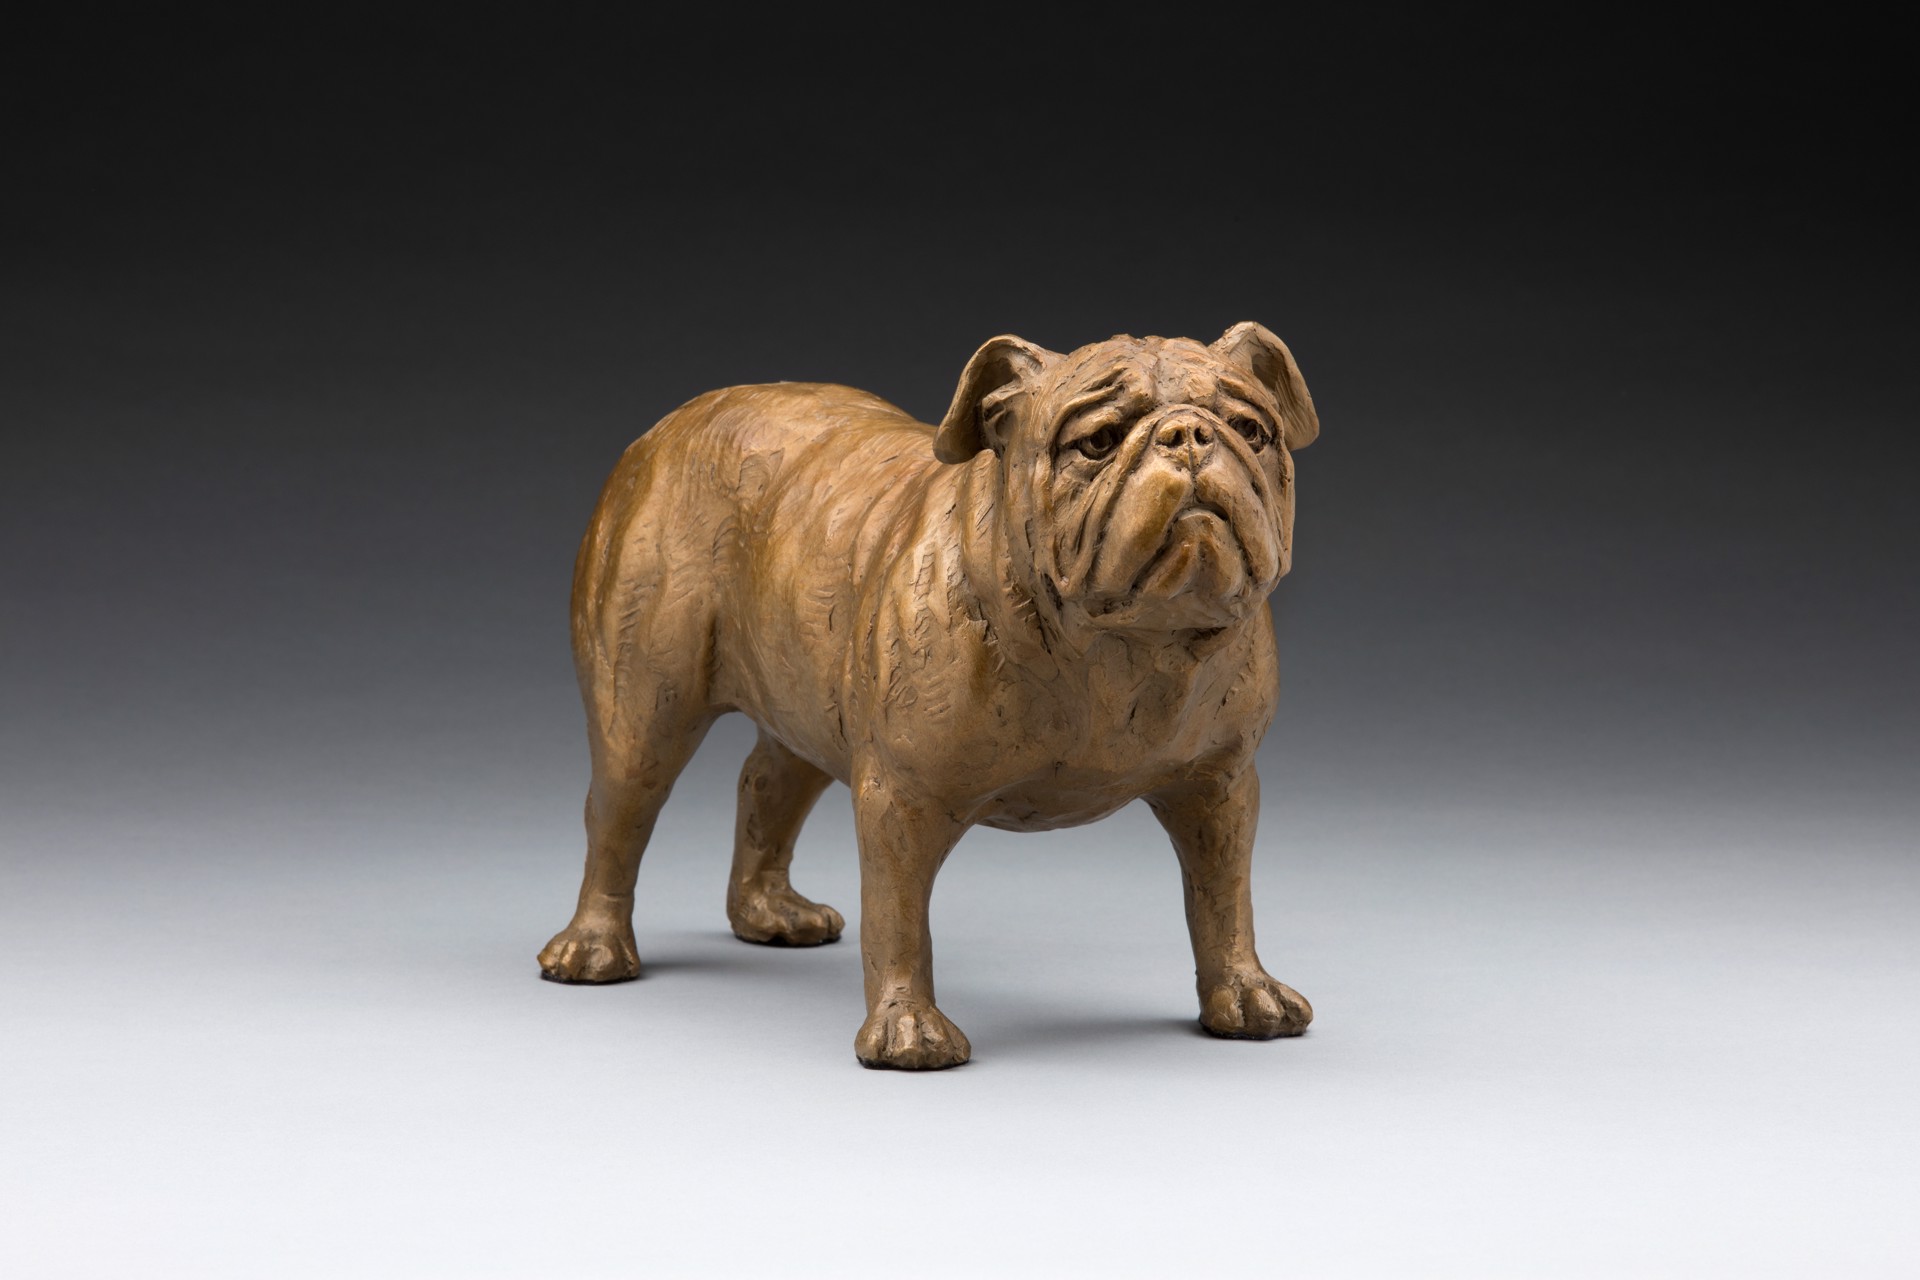 Mr. Personality  English Bulldog (Ed. of 30) by Daniel Glanz (sculptor)